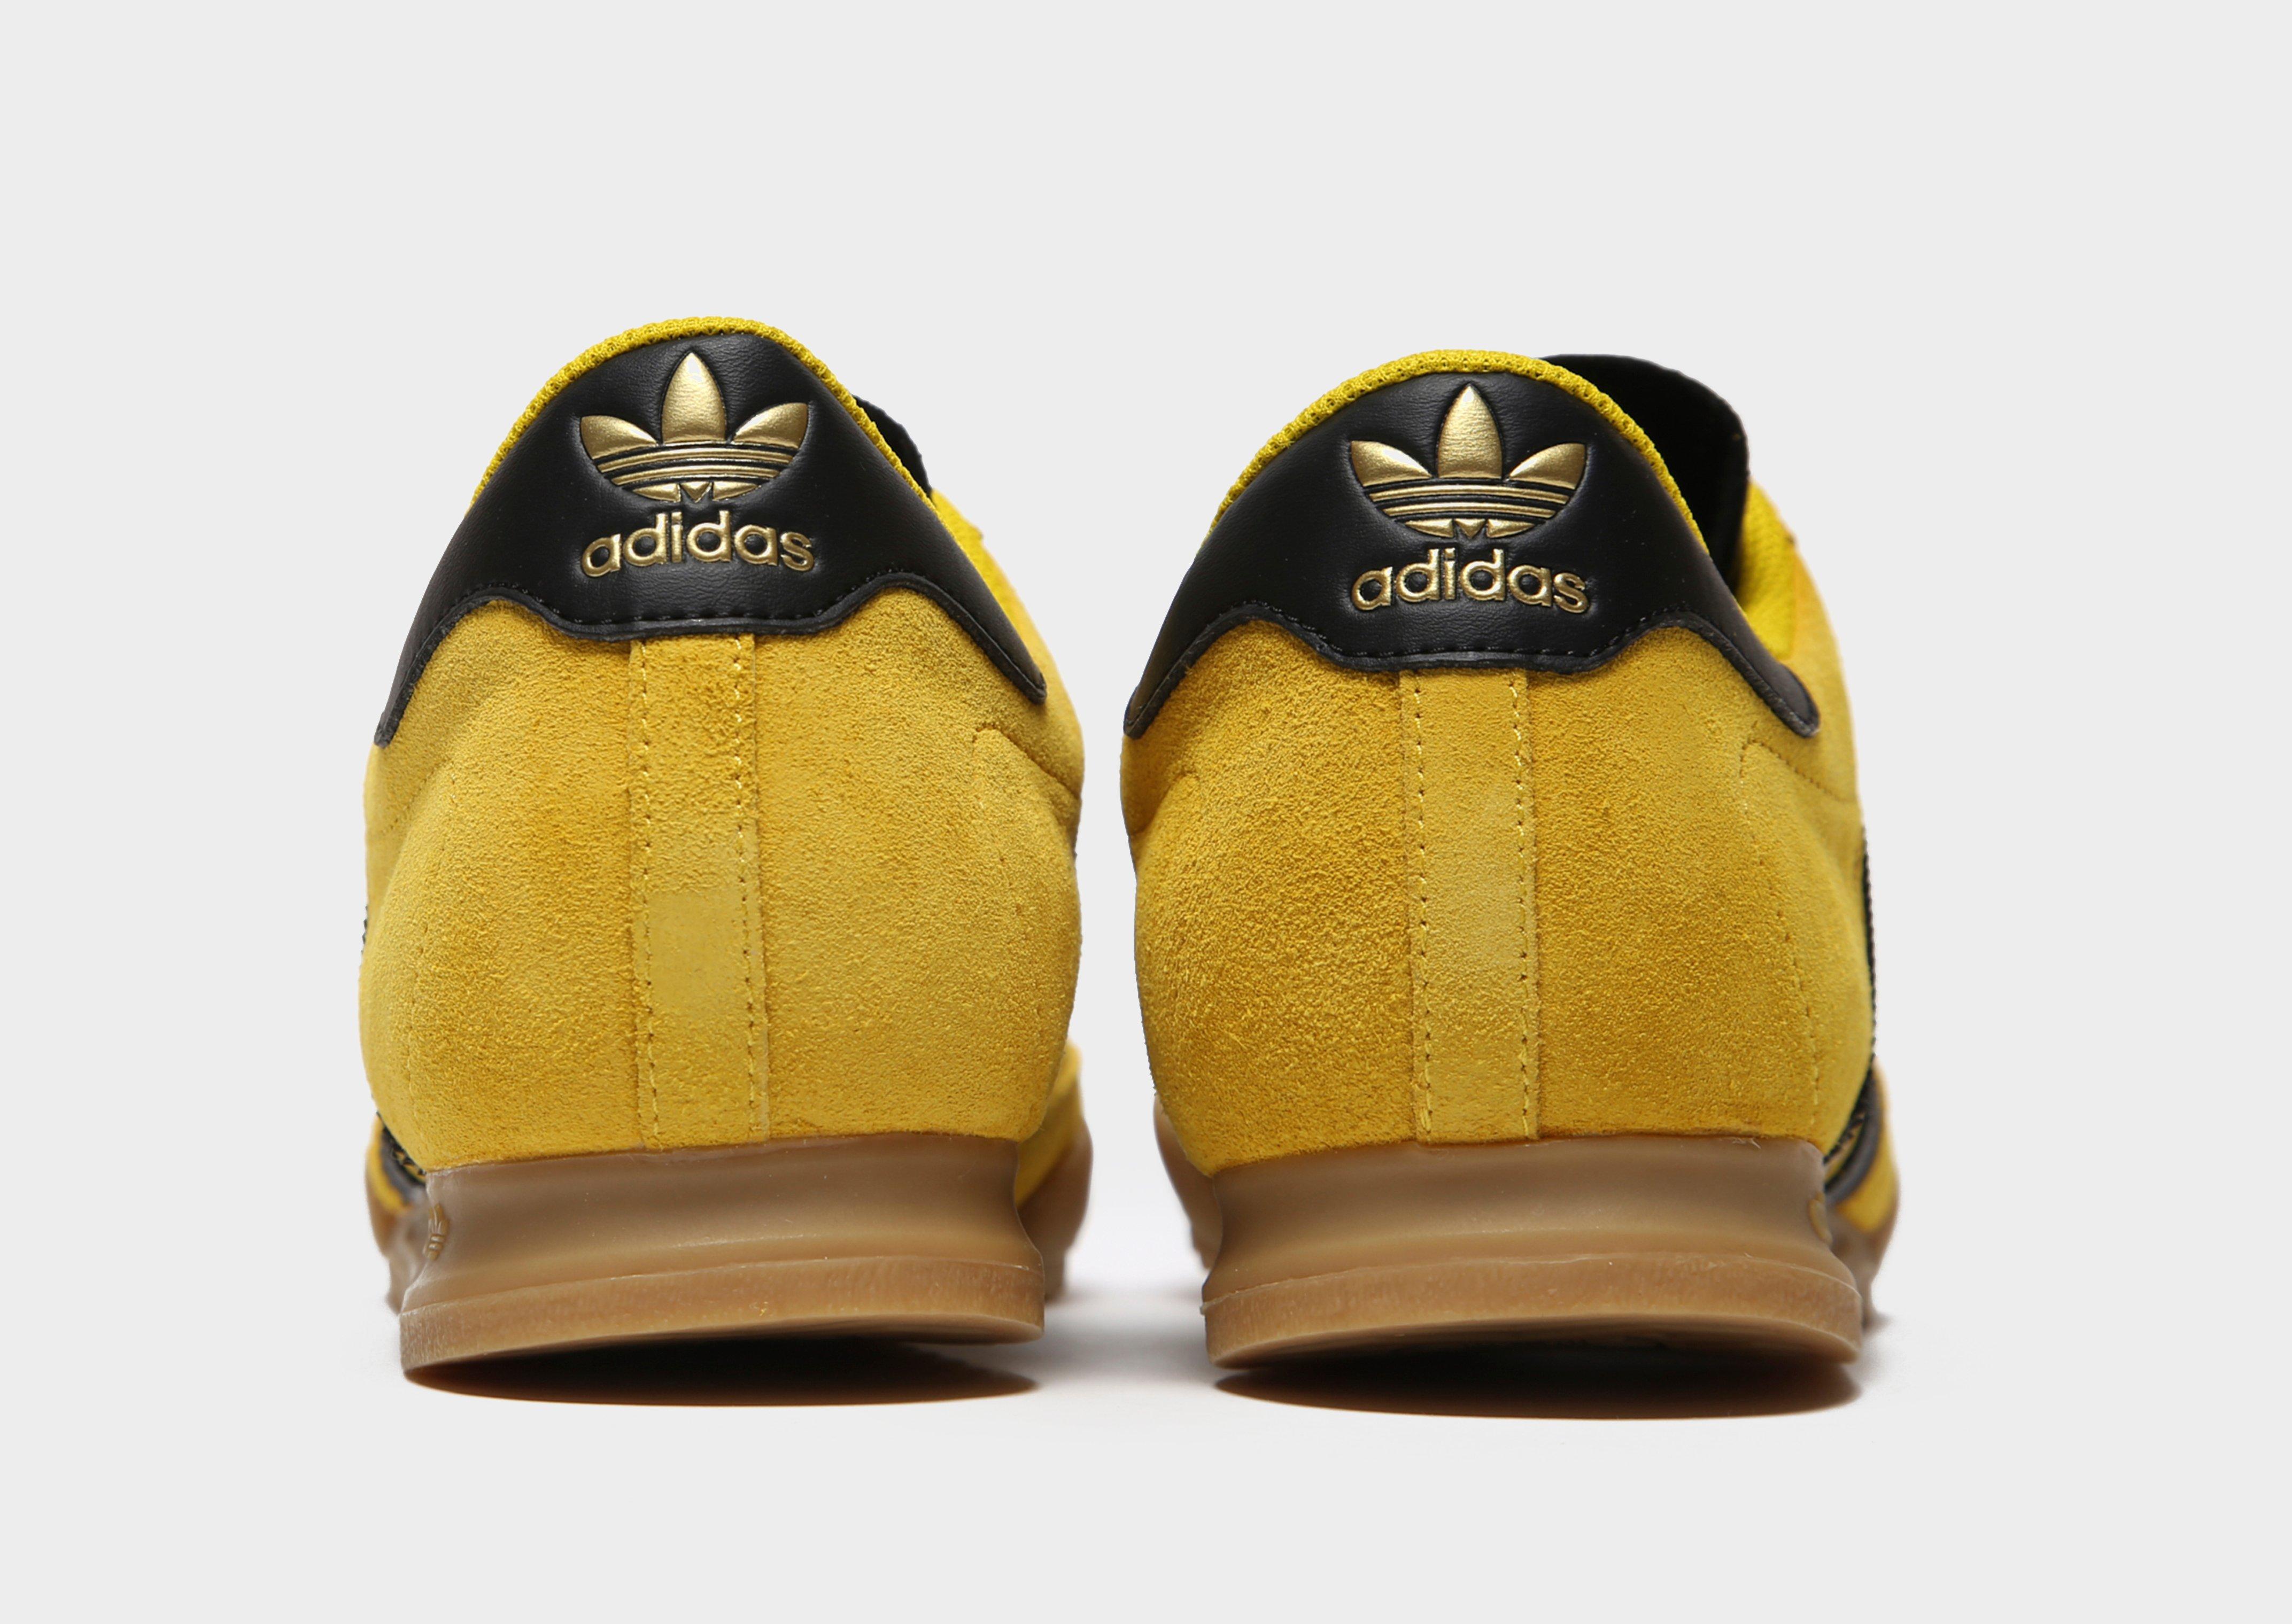 adidas beckenbauer yellow and black